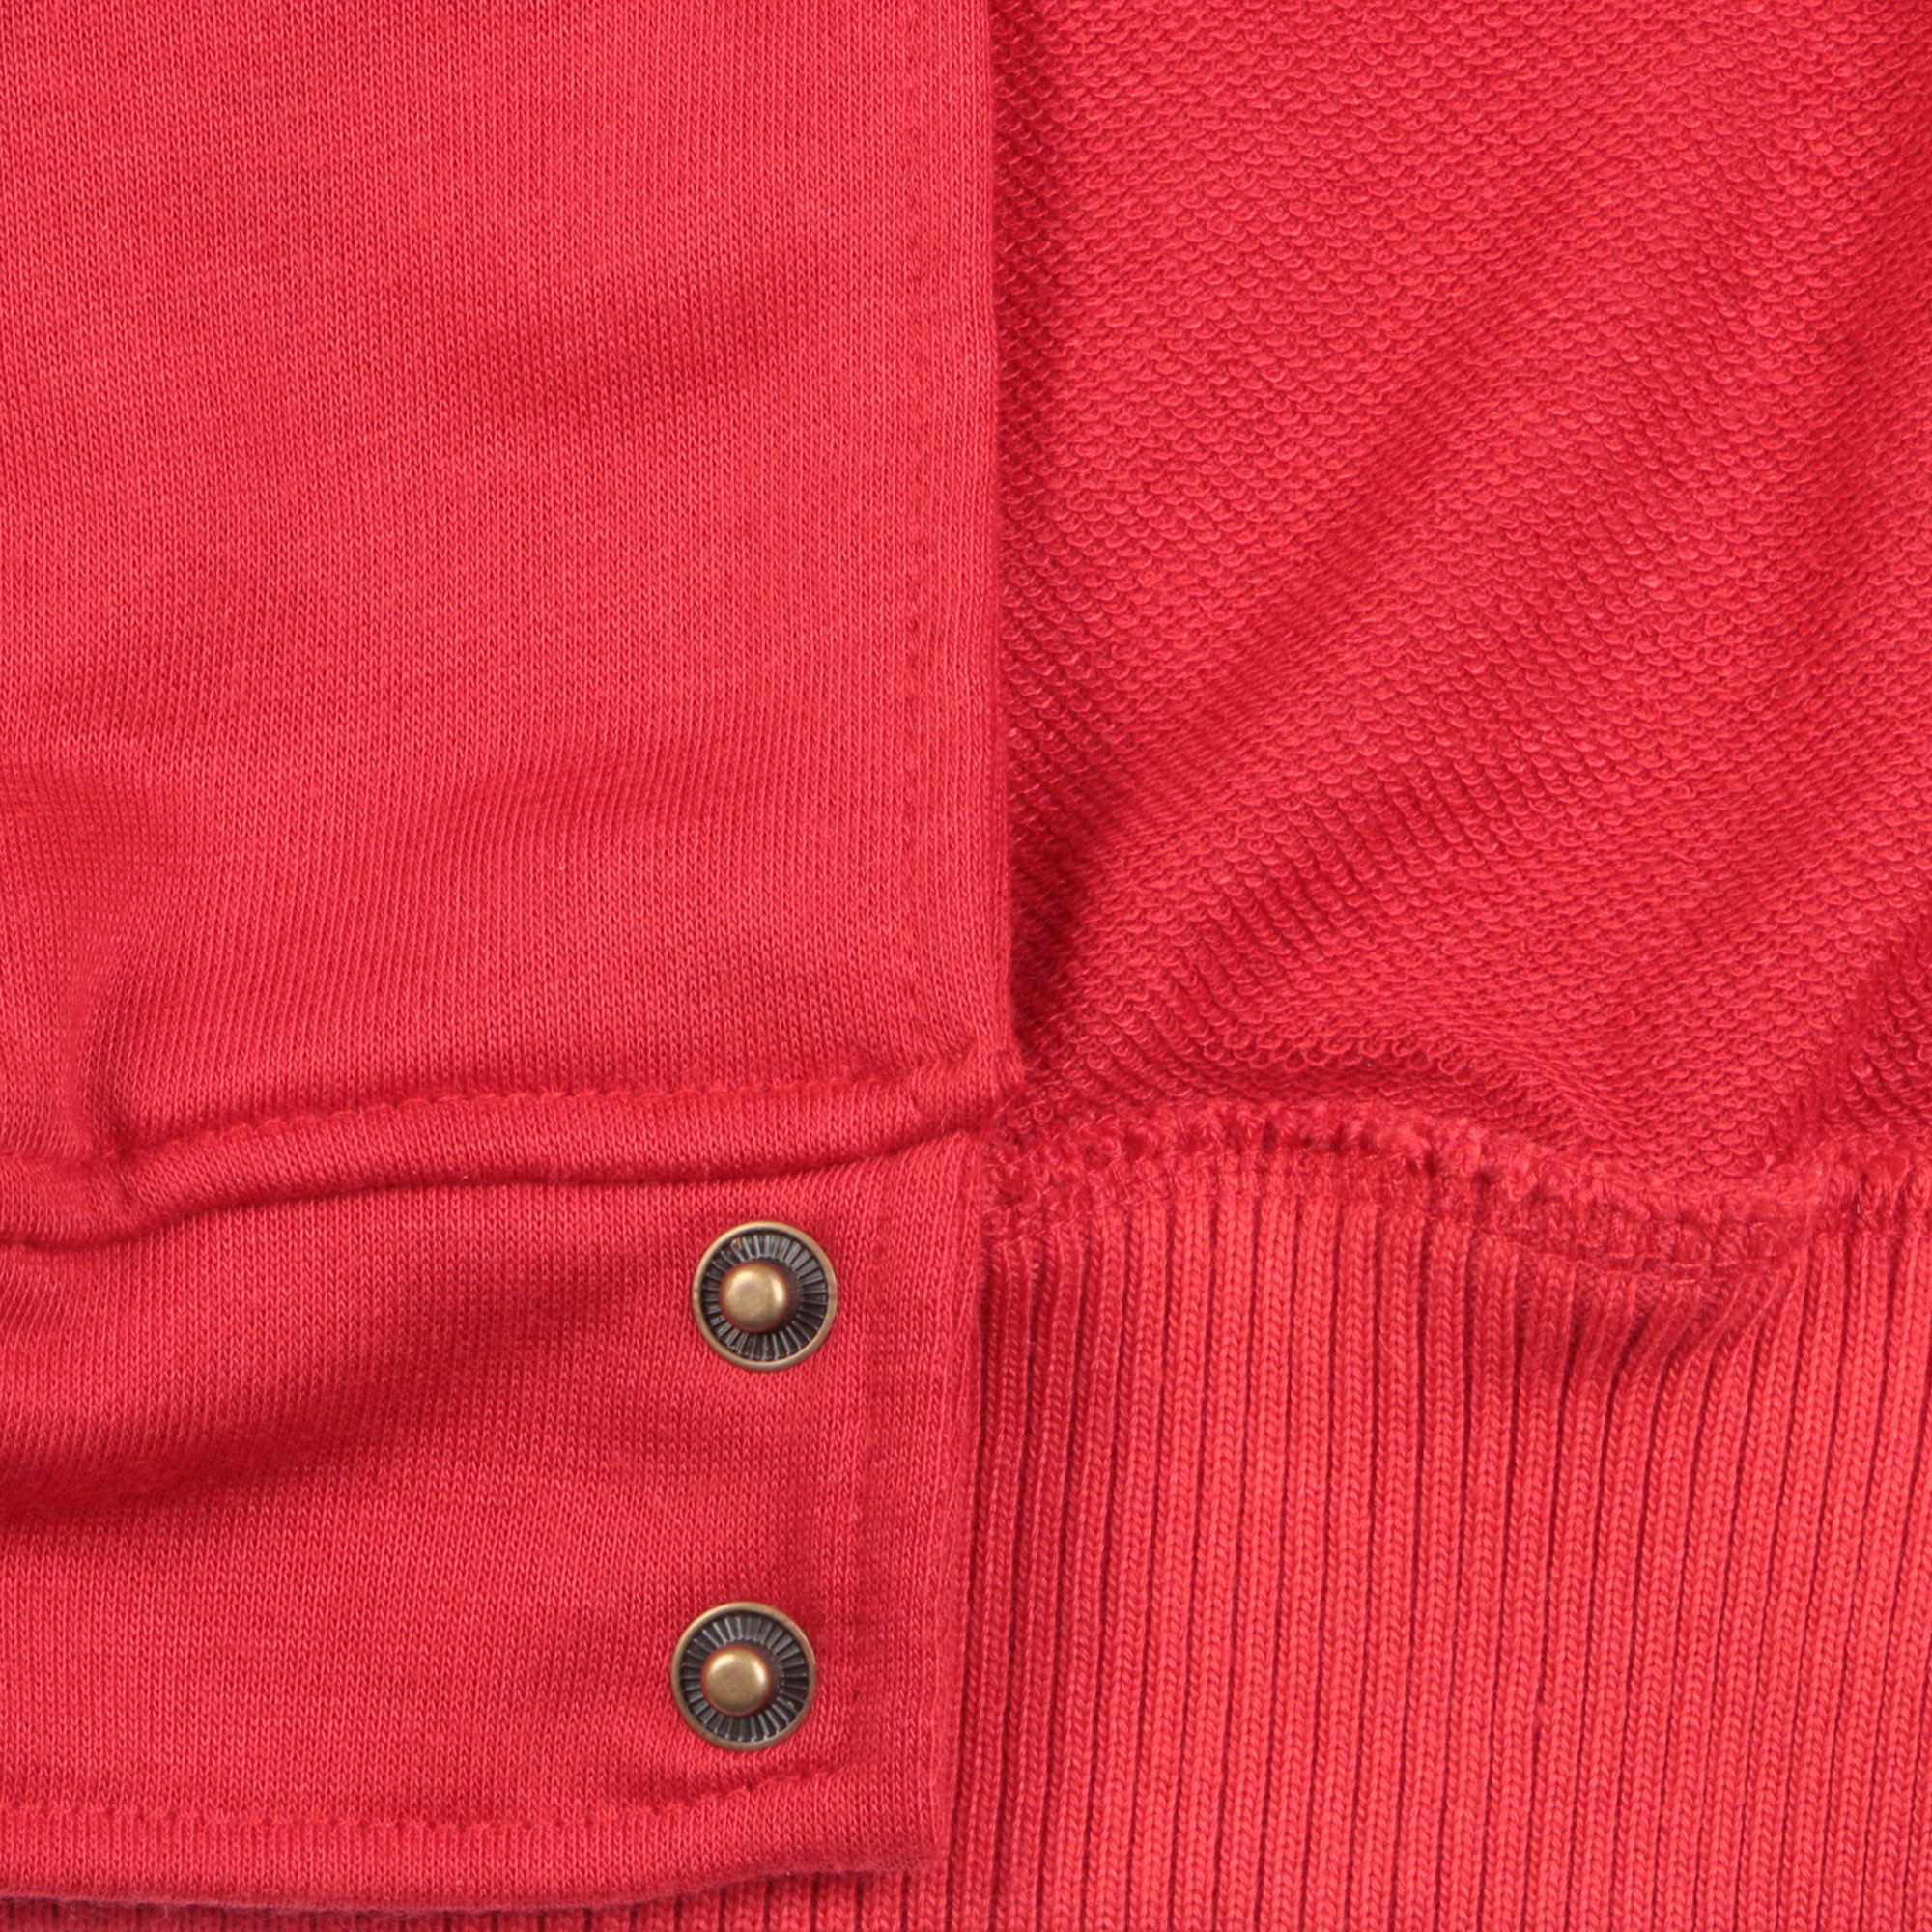 Бомбер Garment красный/белый XL полиэстер, размер XL - фото 4